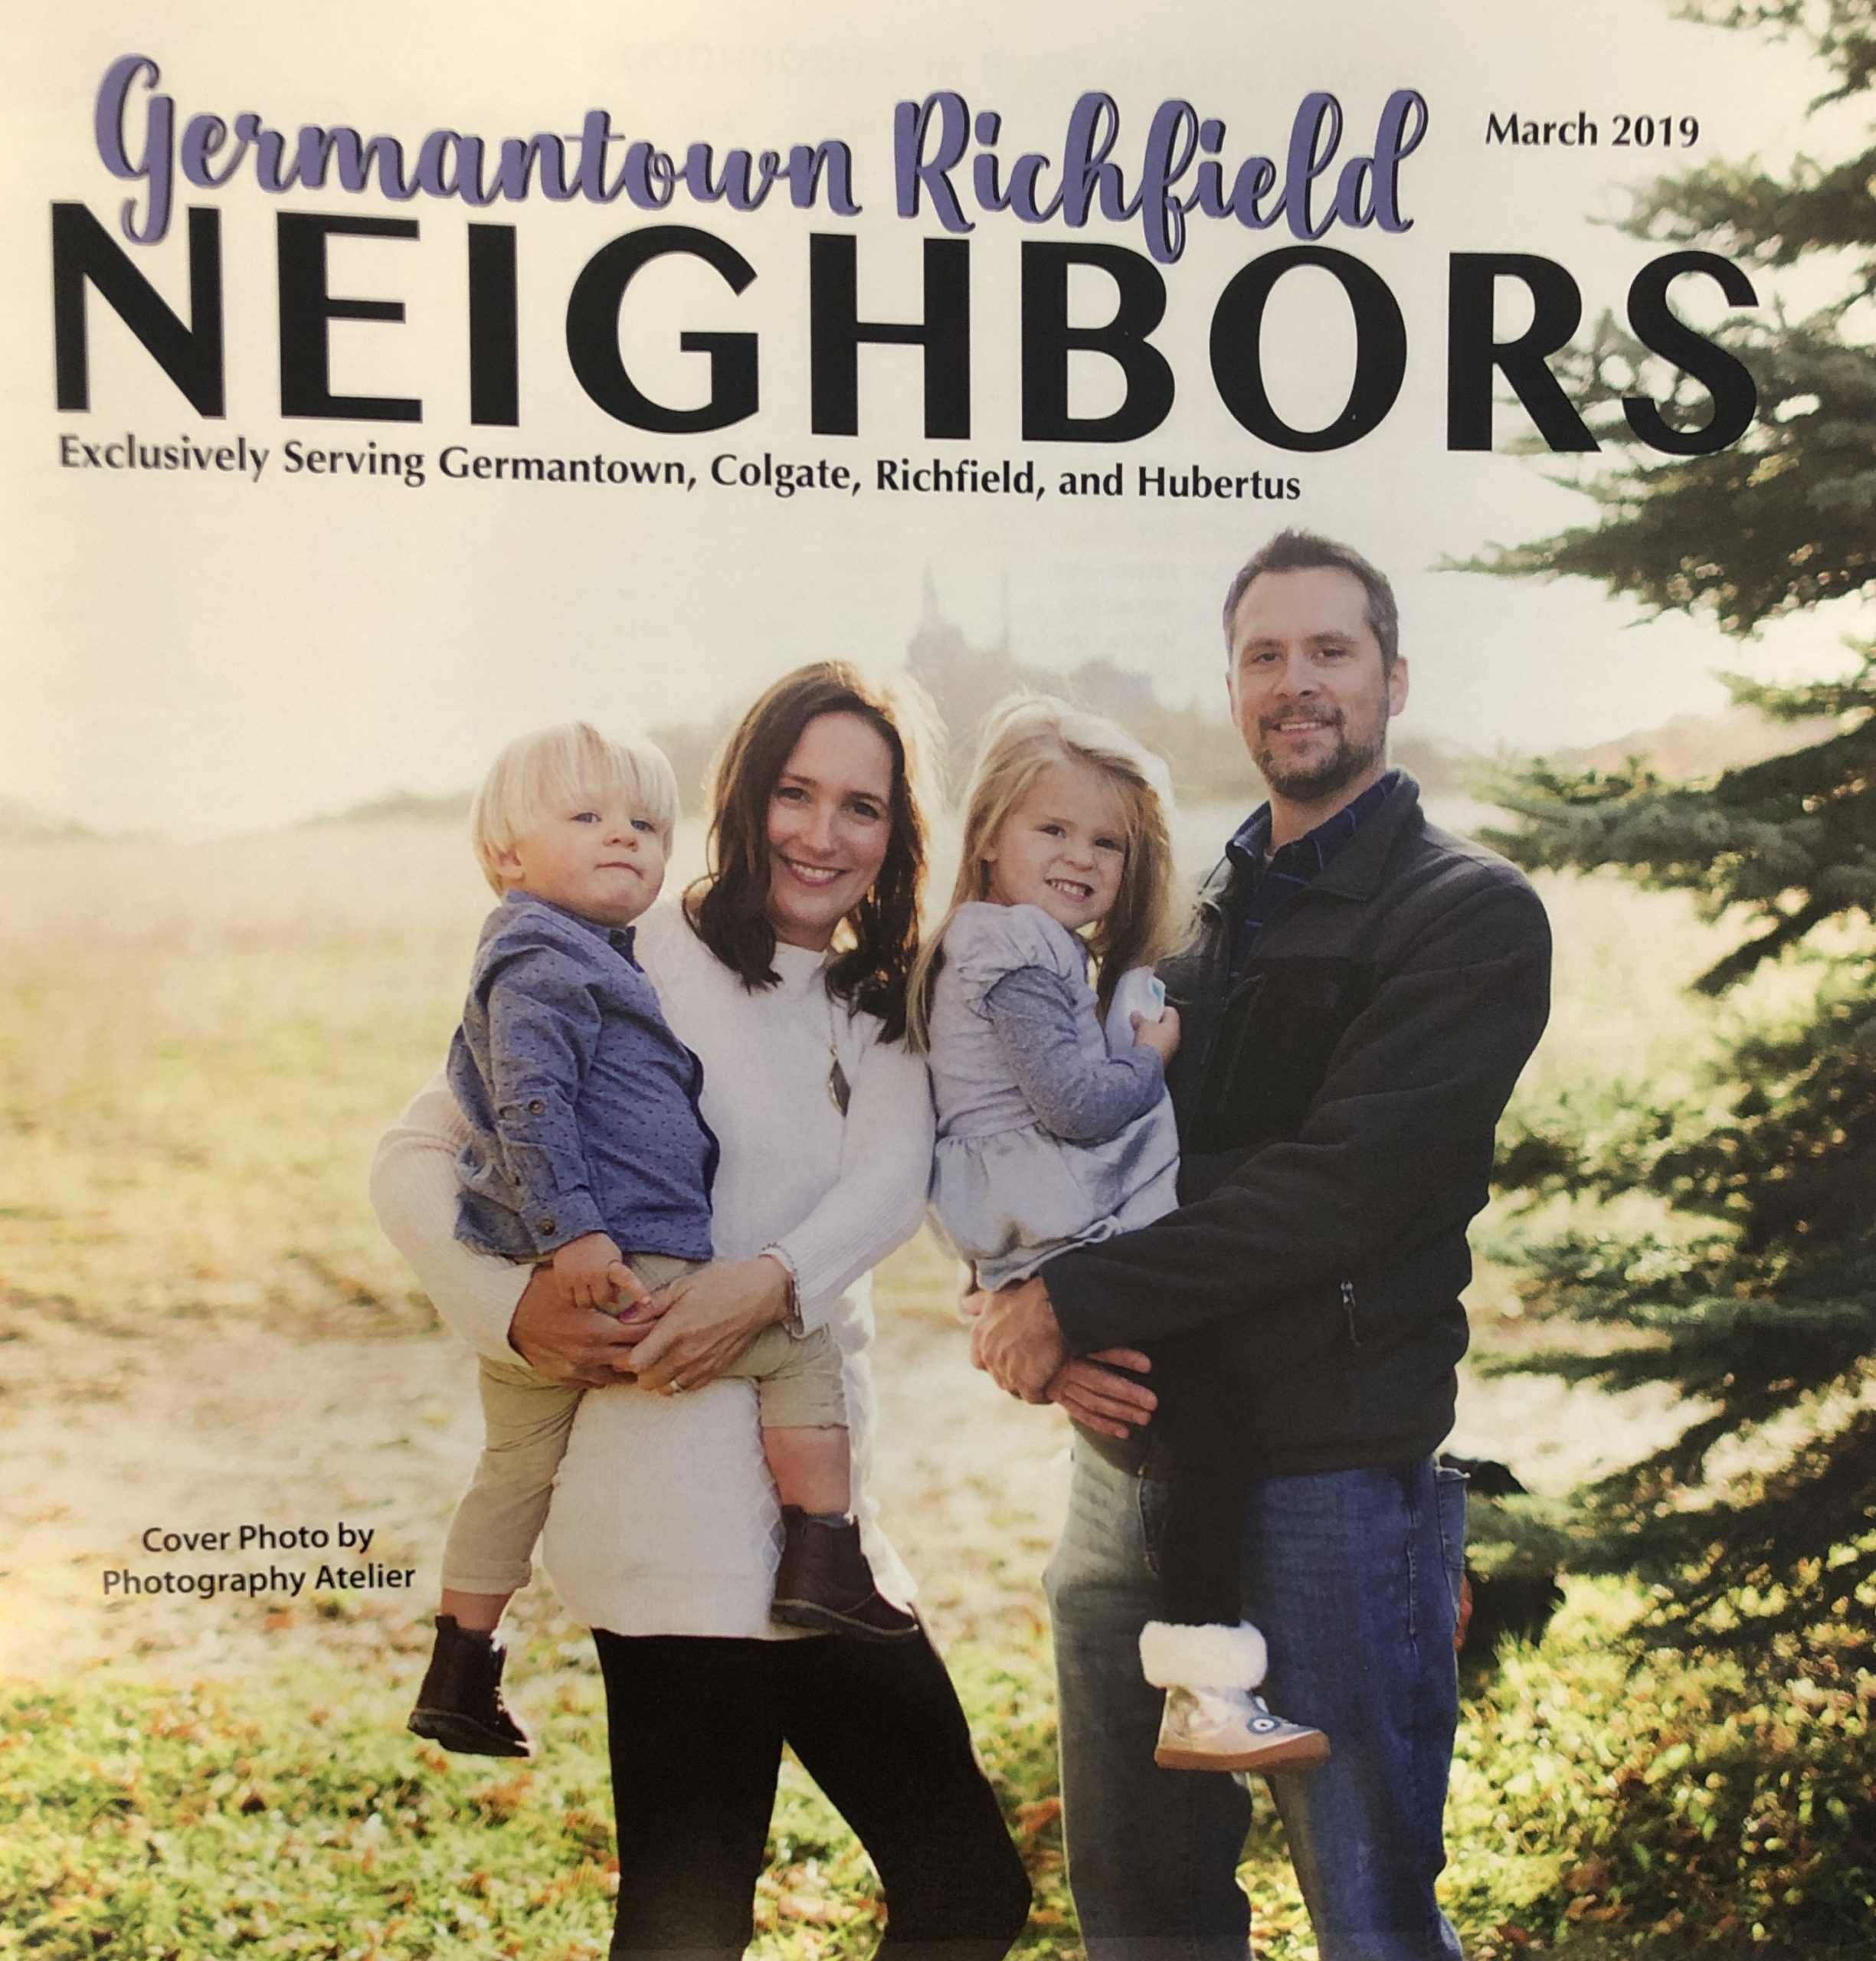 Dalnodar family featured in Germantown Richfield Neighbors magazine